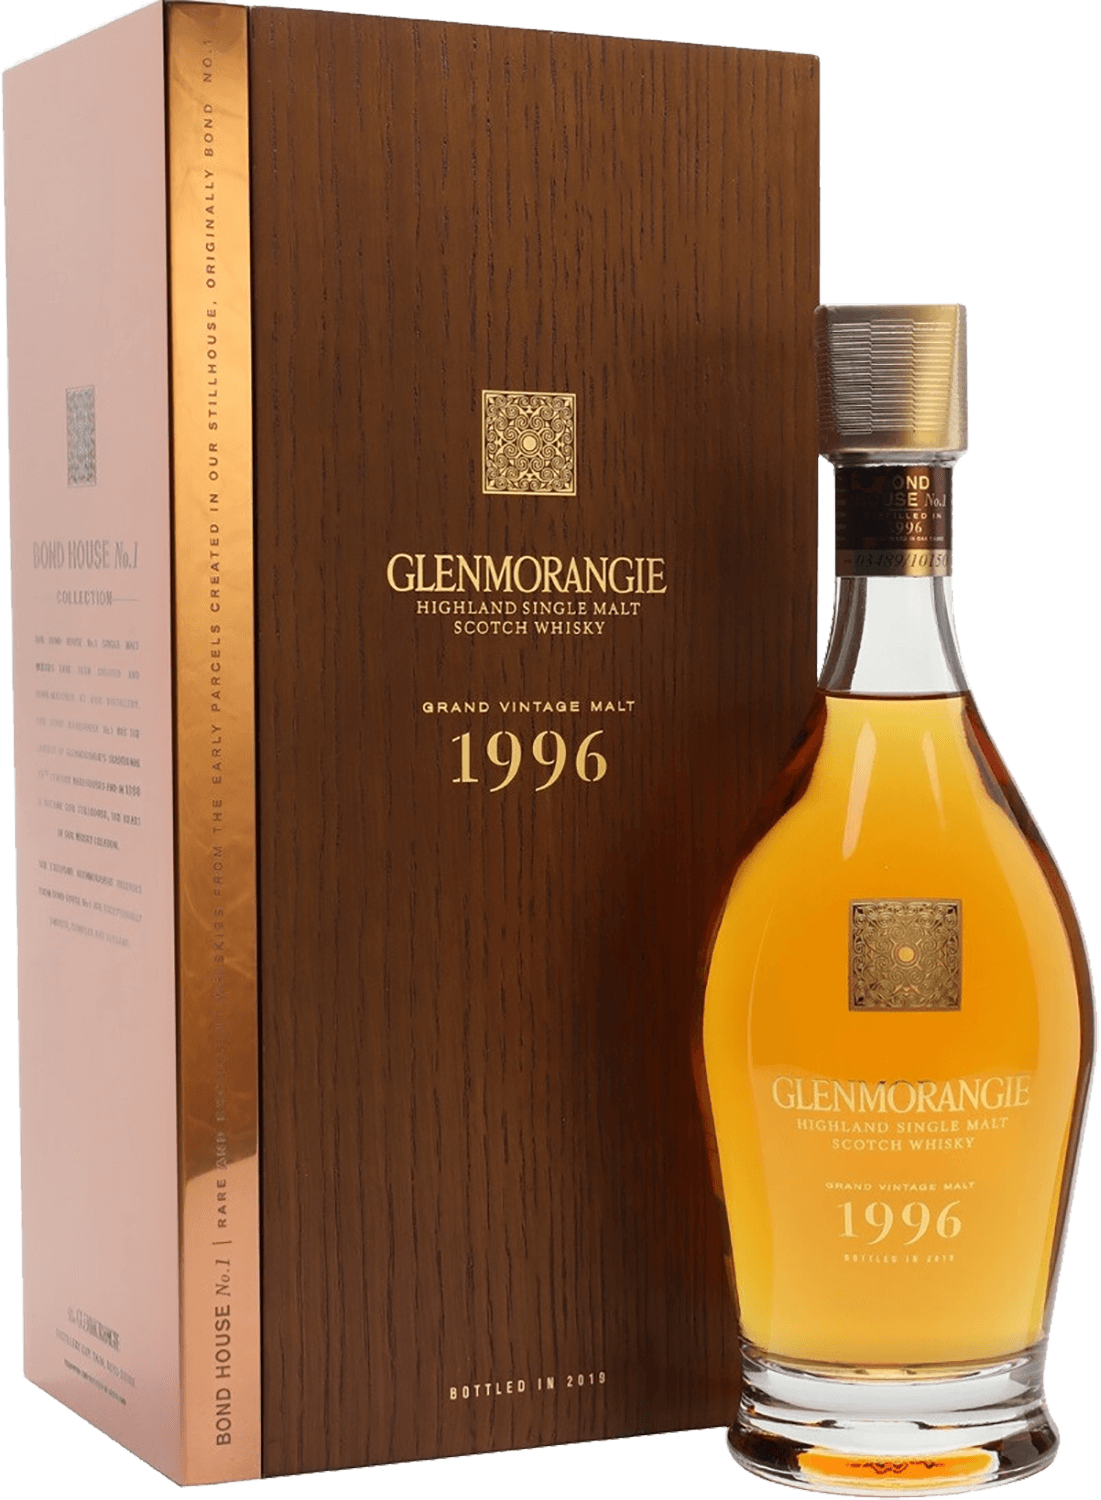 Glenmorangie Grand Vintage Malt Highland Single Malt Scotch Whisky (gift box) highland park valknut single malt scotch whisky gift box